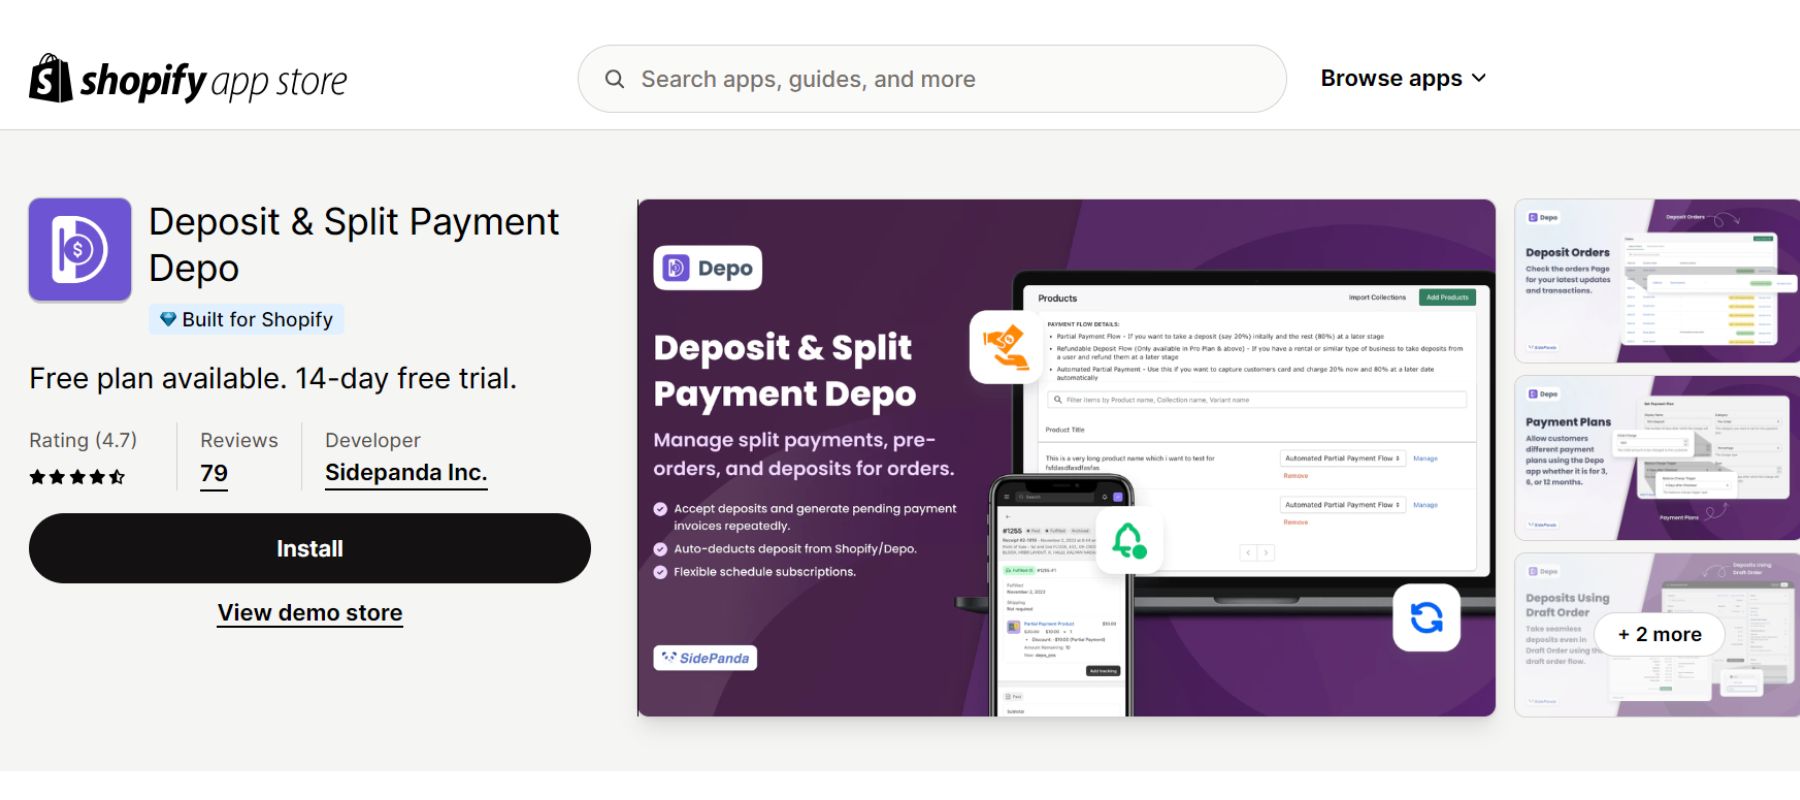 Deposit & Split Payment on the Shopify App Store.